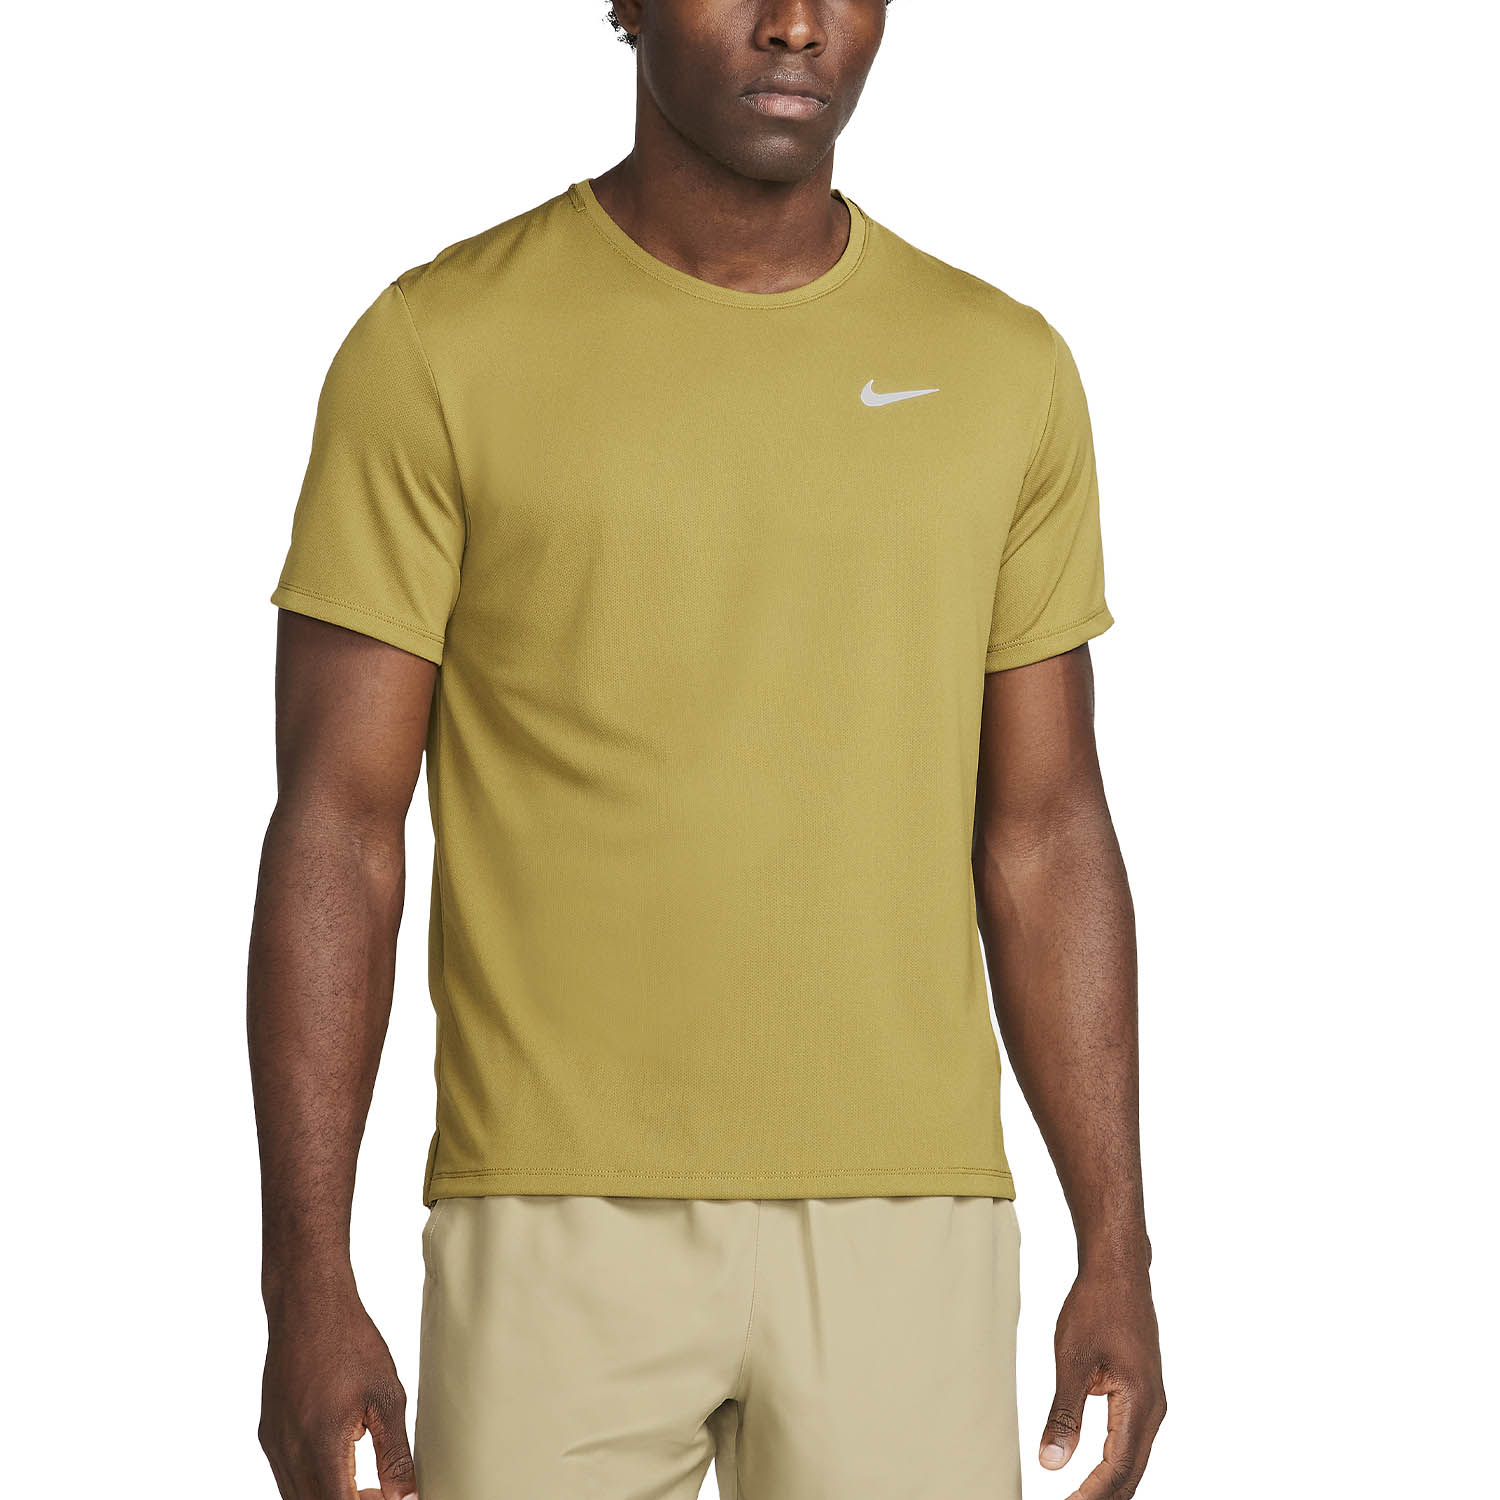 Nike Dri-FIT UV Run Division Miler T-Shirt - Pacific Moss/Reflective Silver